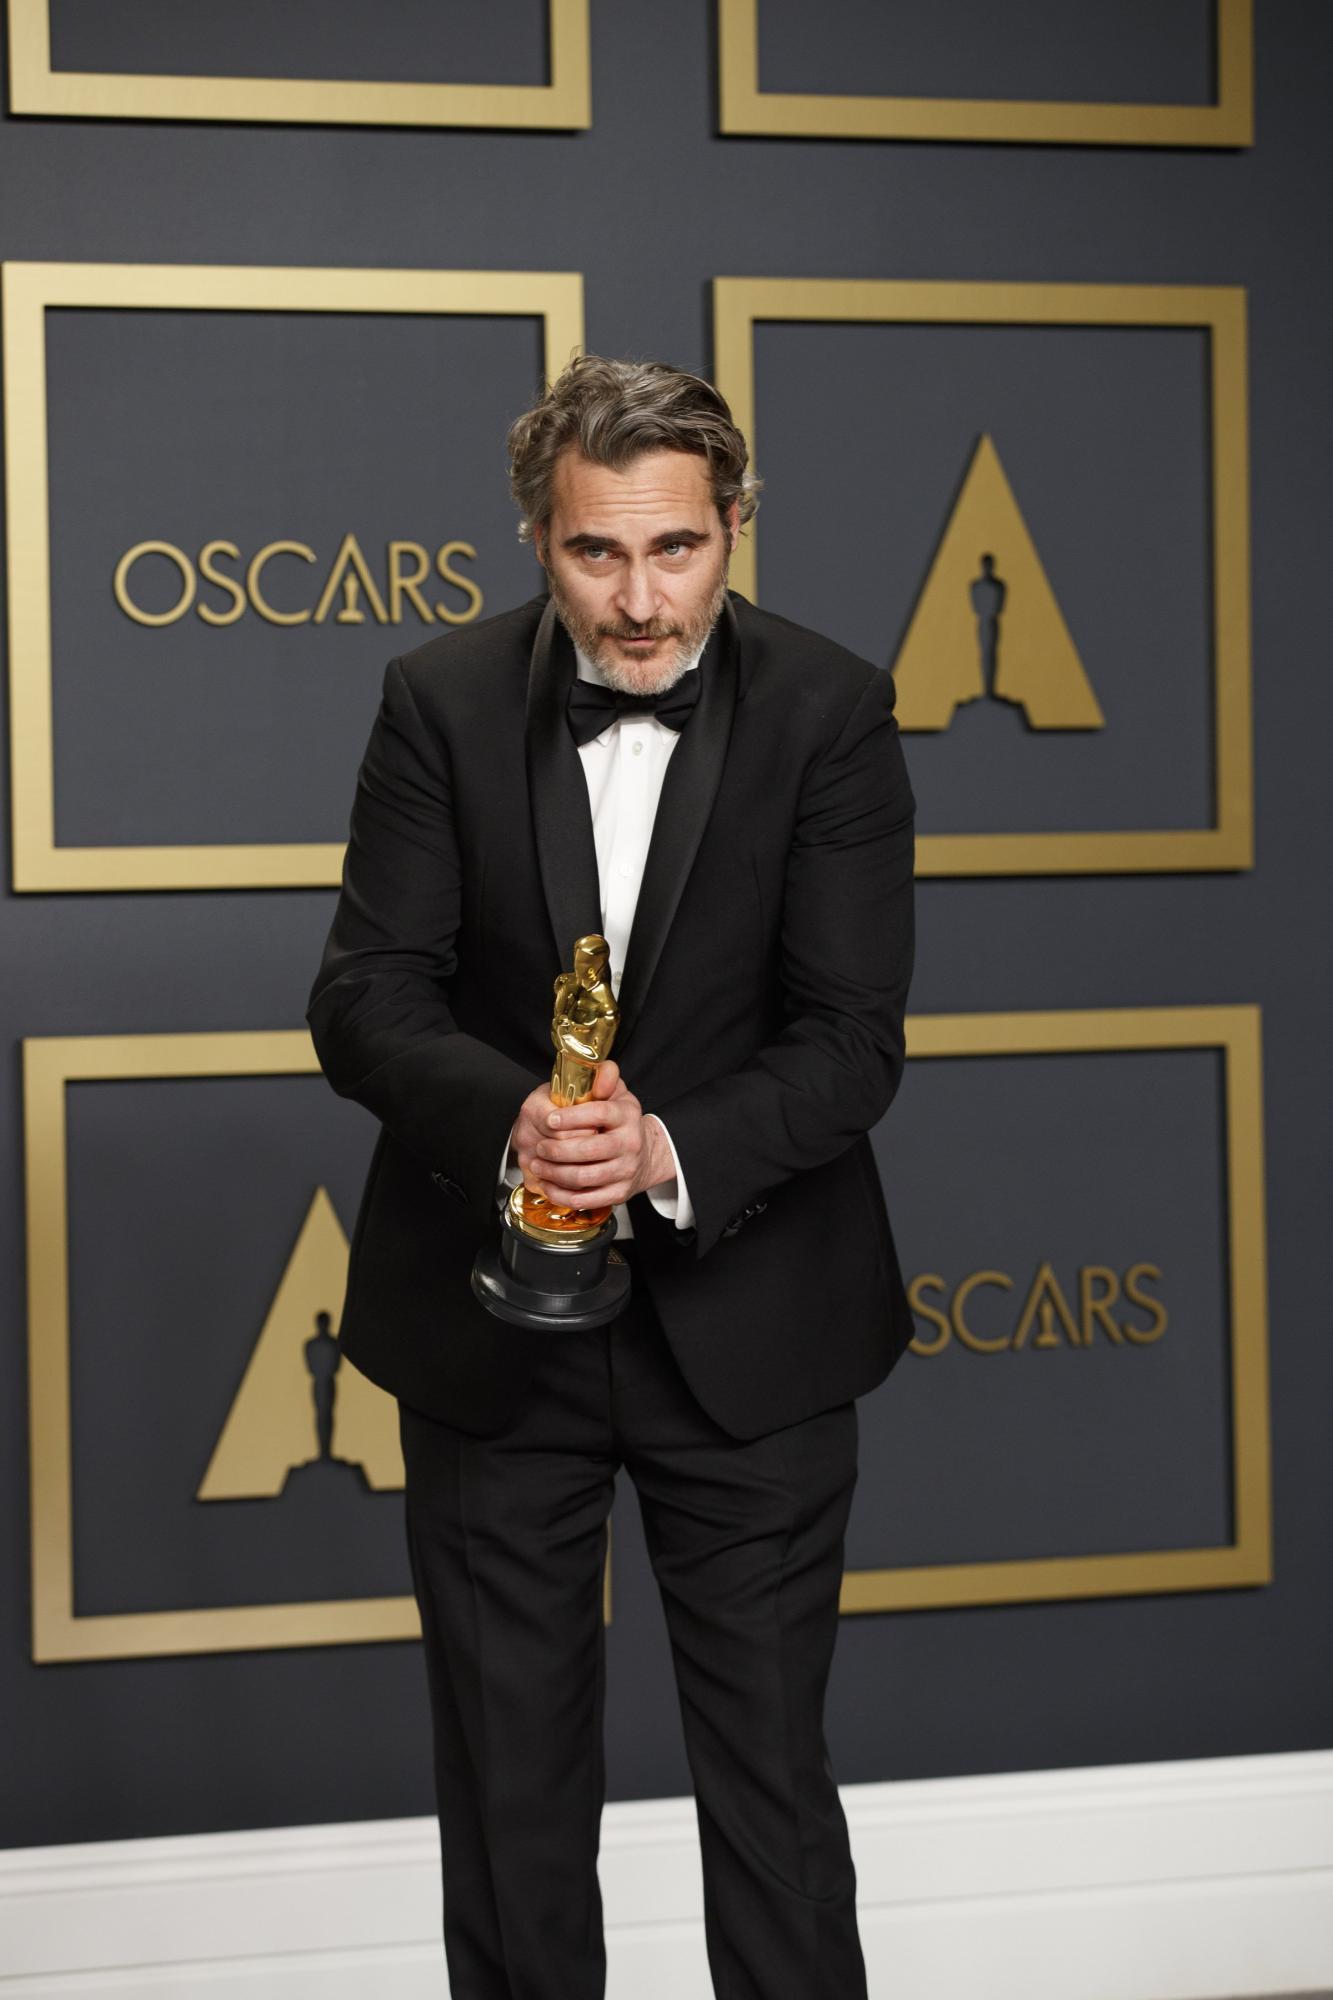 Oscars 2020: Joaquin Phoenix Wins Hearts with Powerful Acceptance Speech - Masala.com